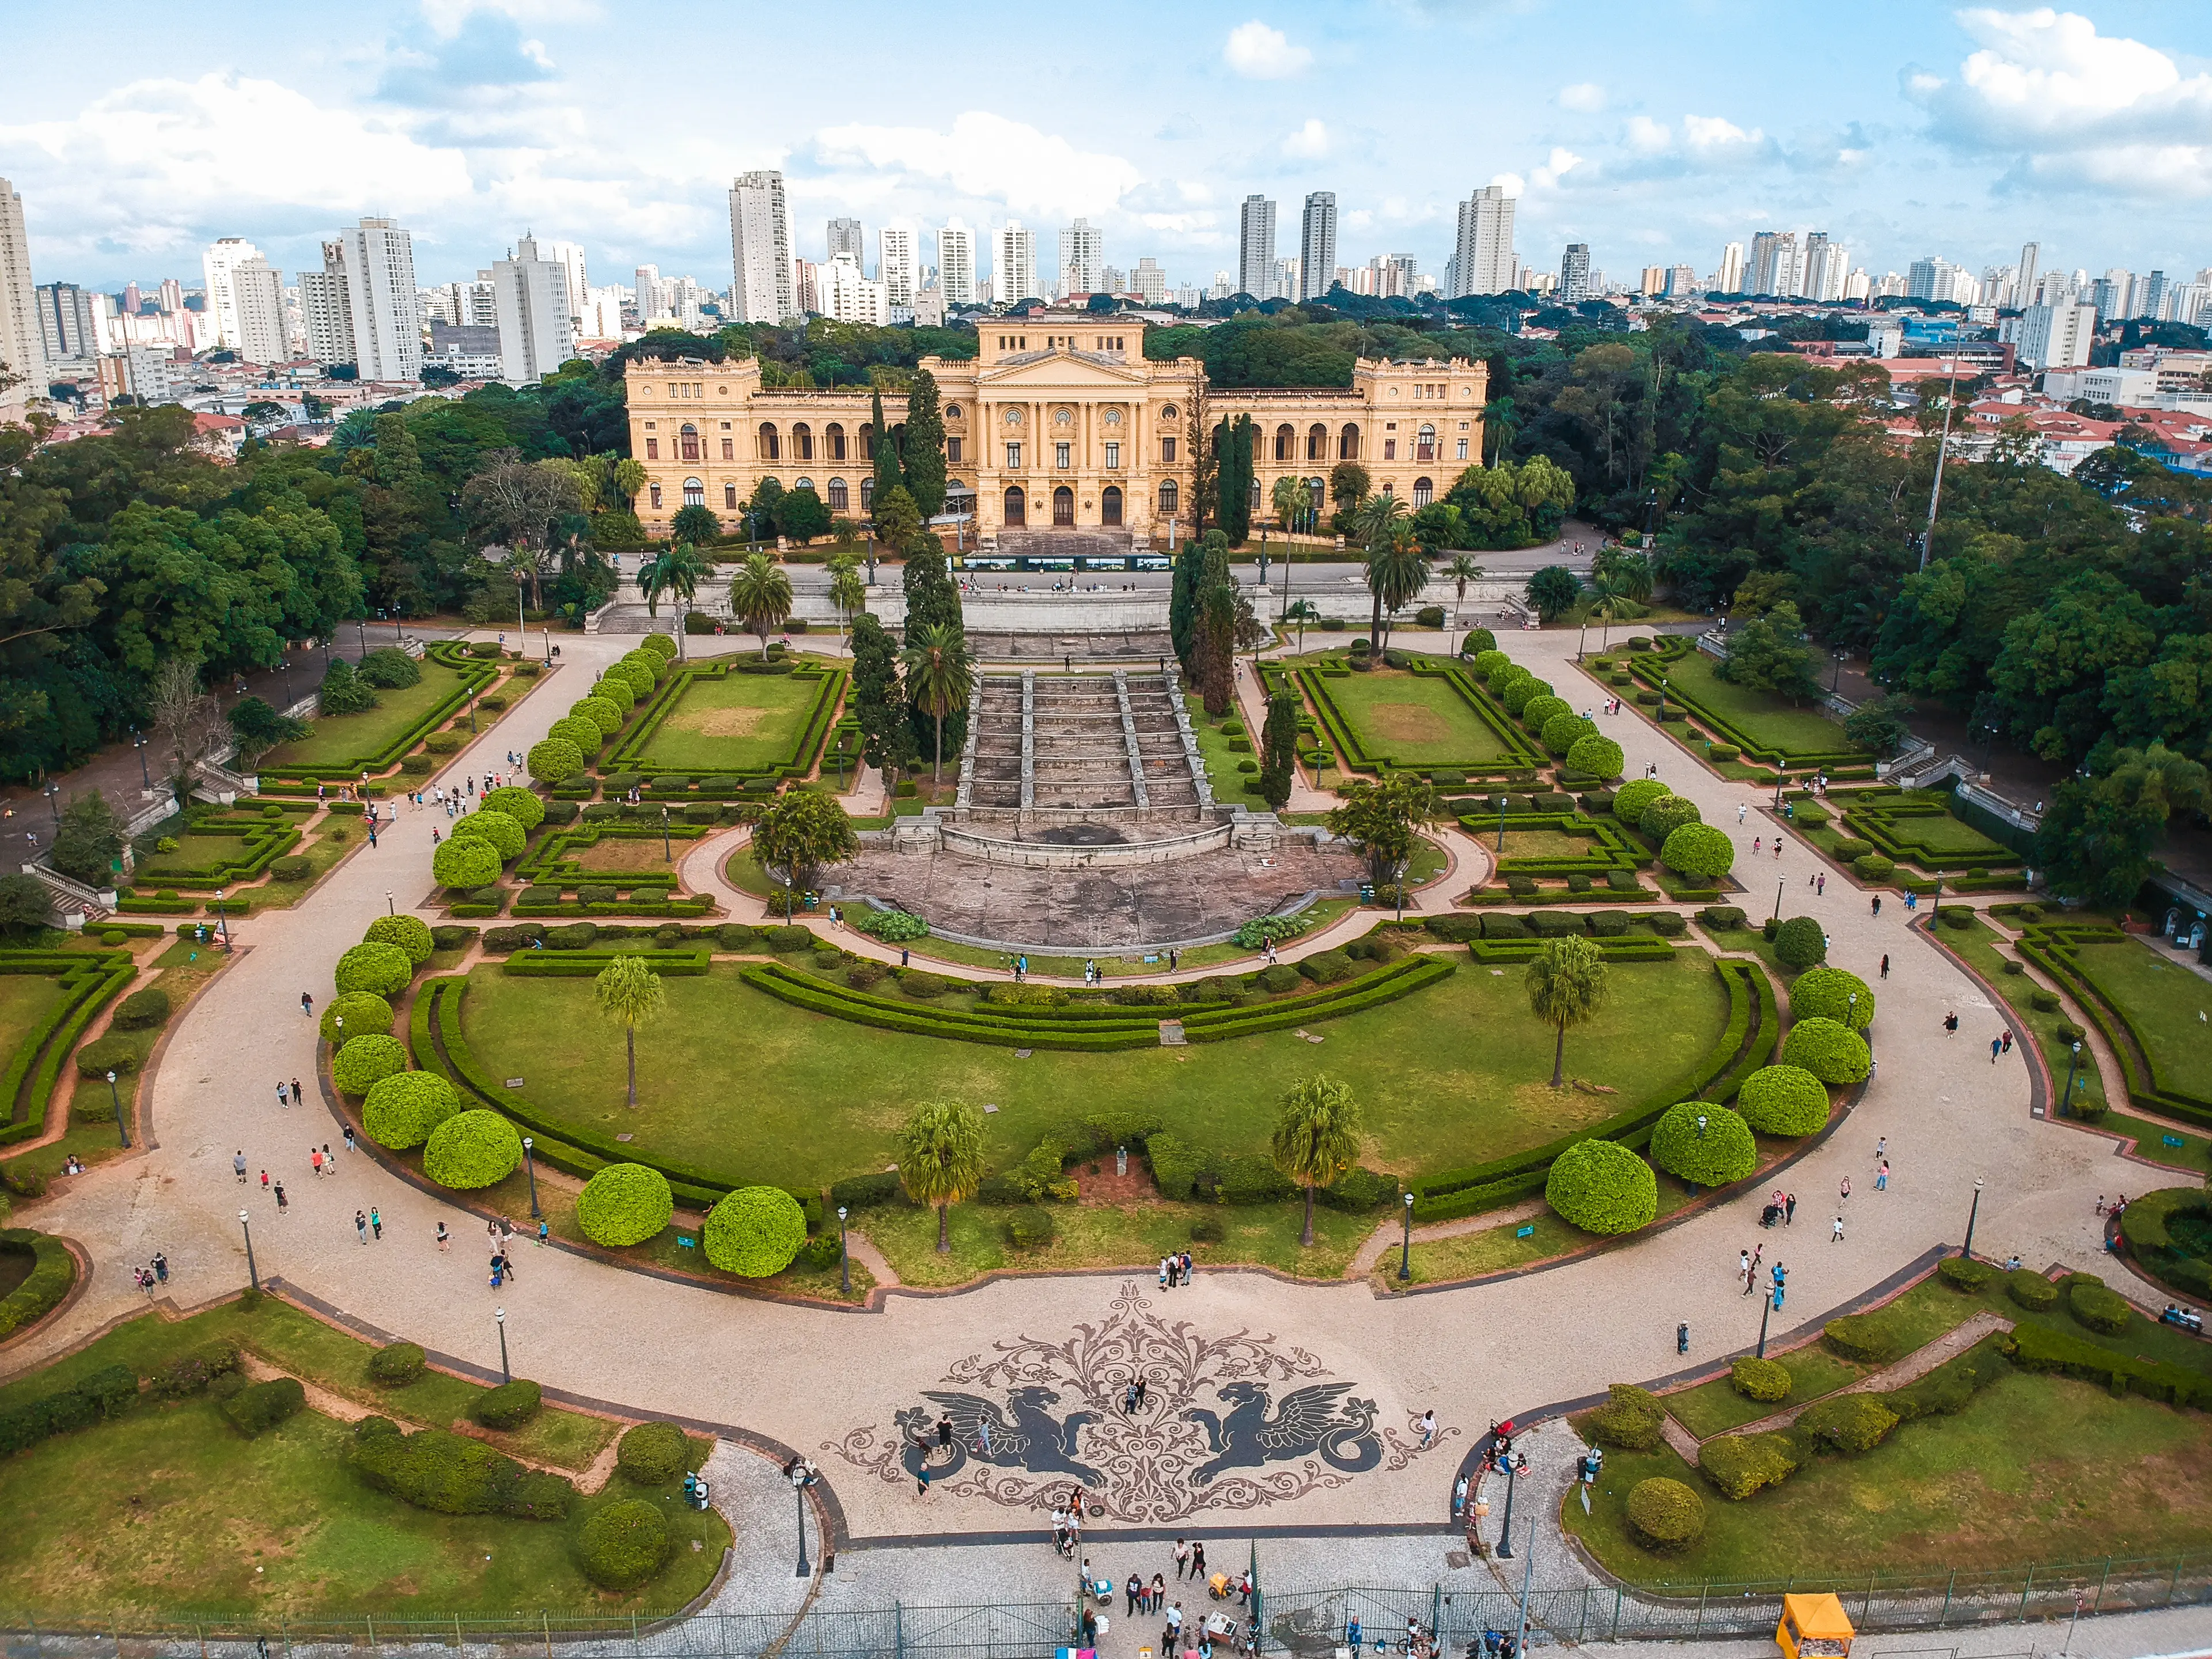 Aerial view of the Paulista museum, also known as Museu do Ipiranga